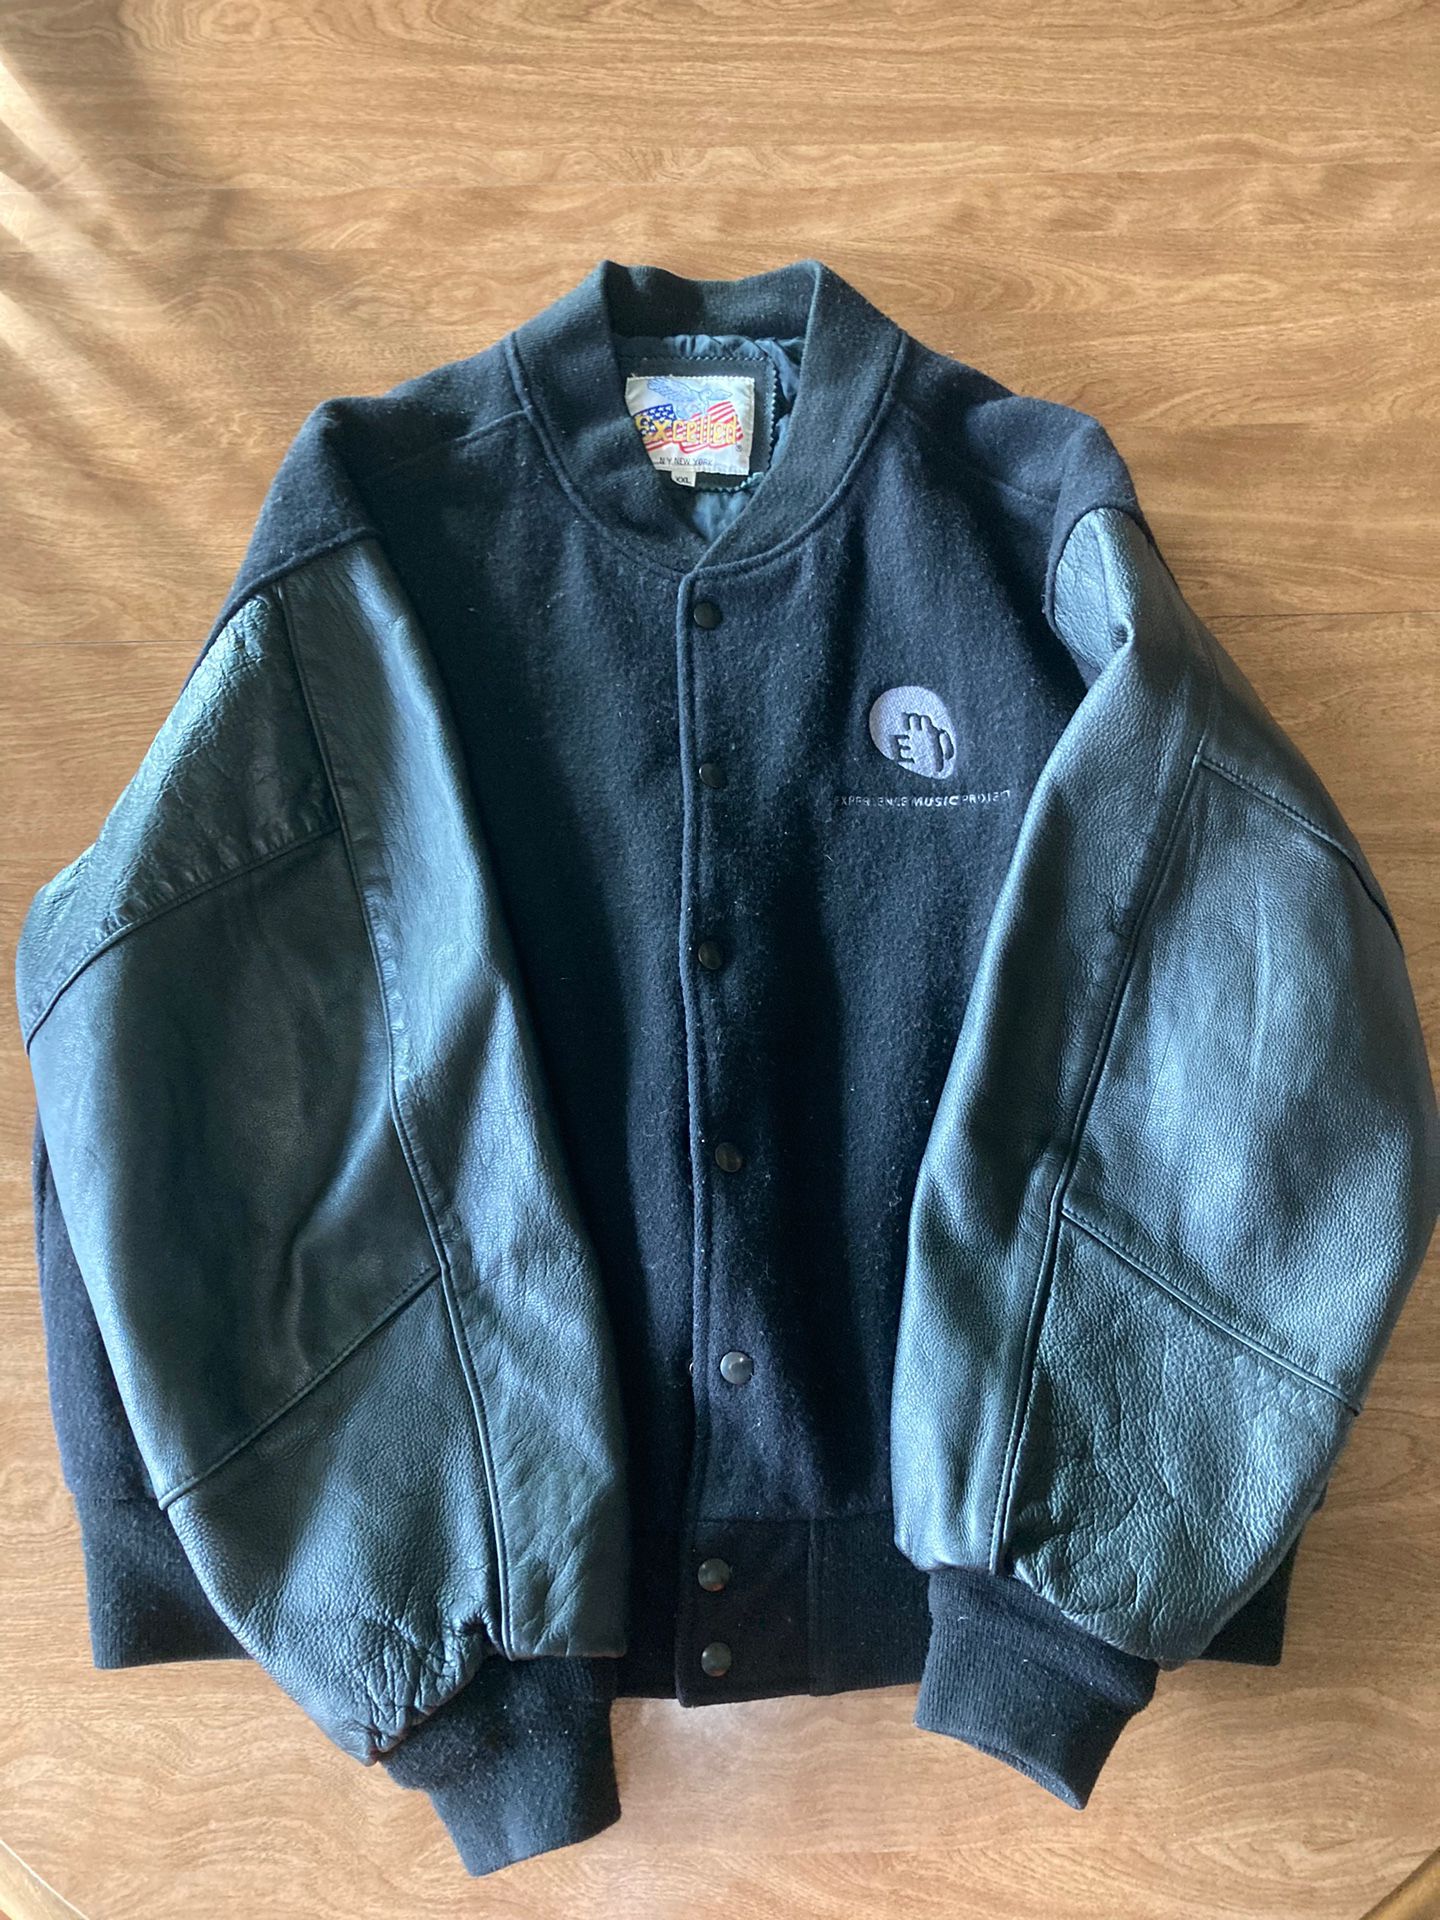 Rare Leather Sleeve Jacket